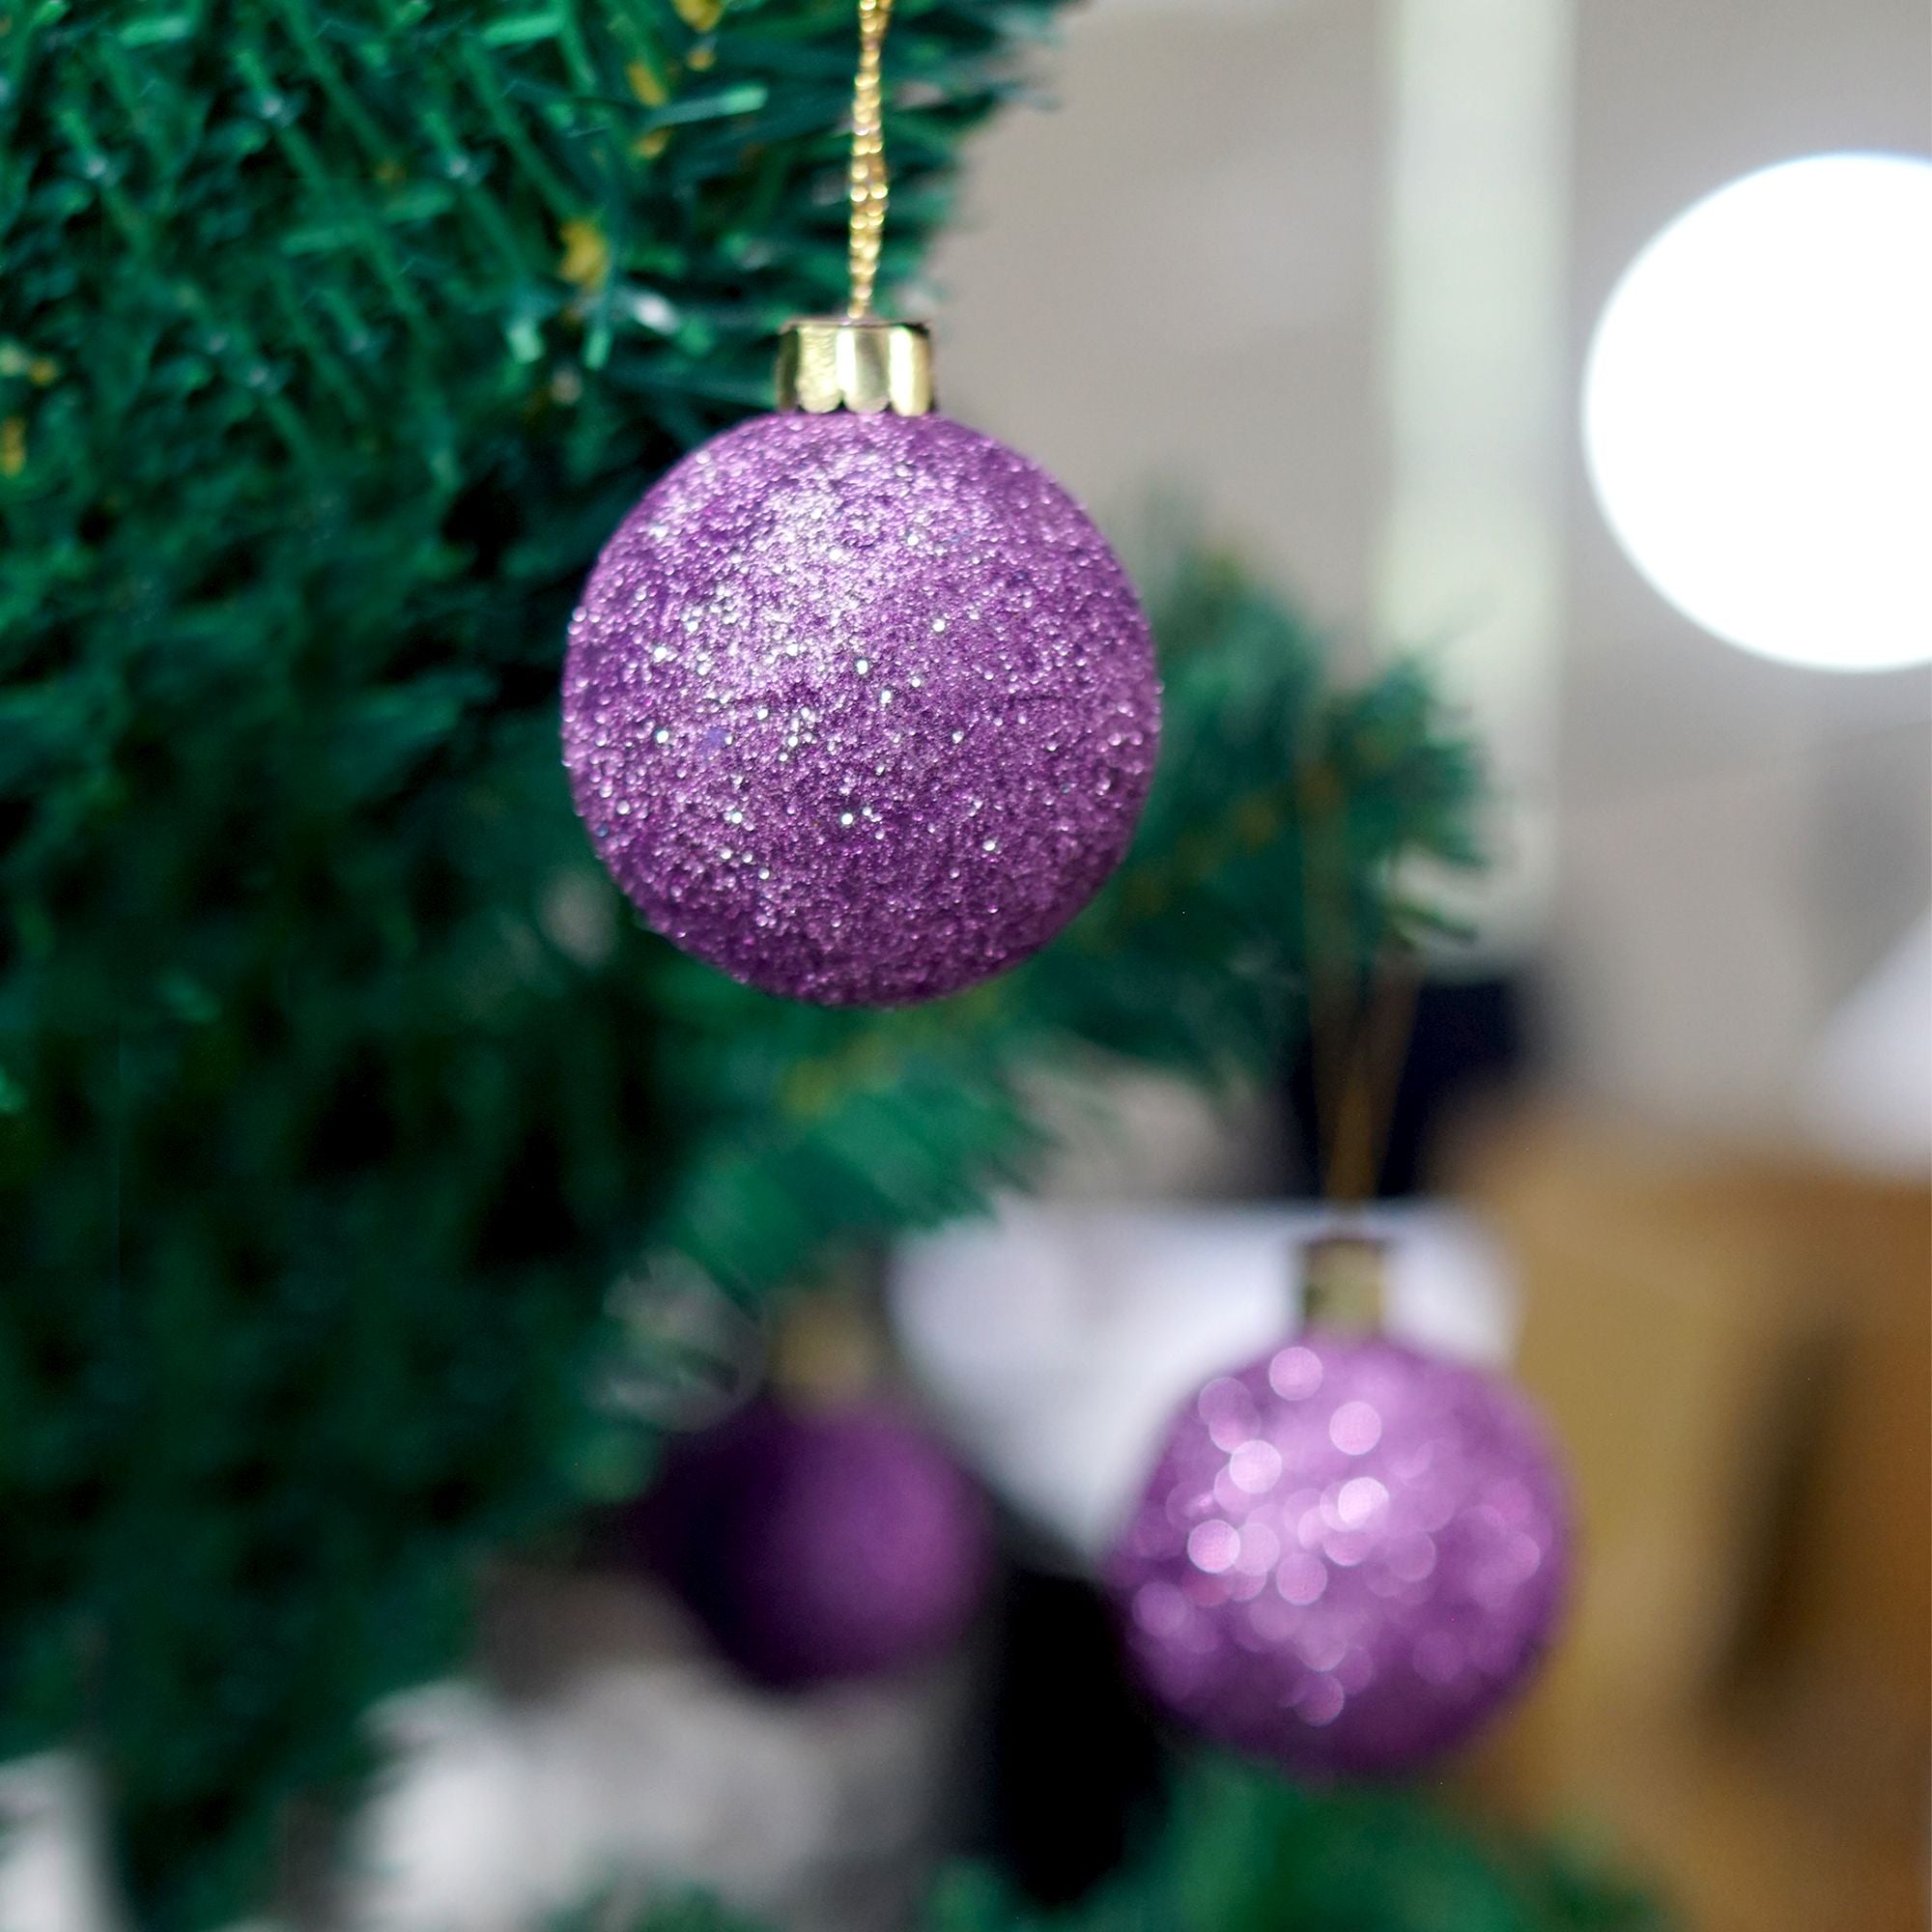 Handmade Christmas Ornaments - Glitter Baubles, 70mm, Purple, 4pc